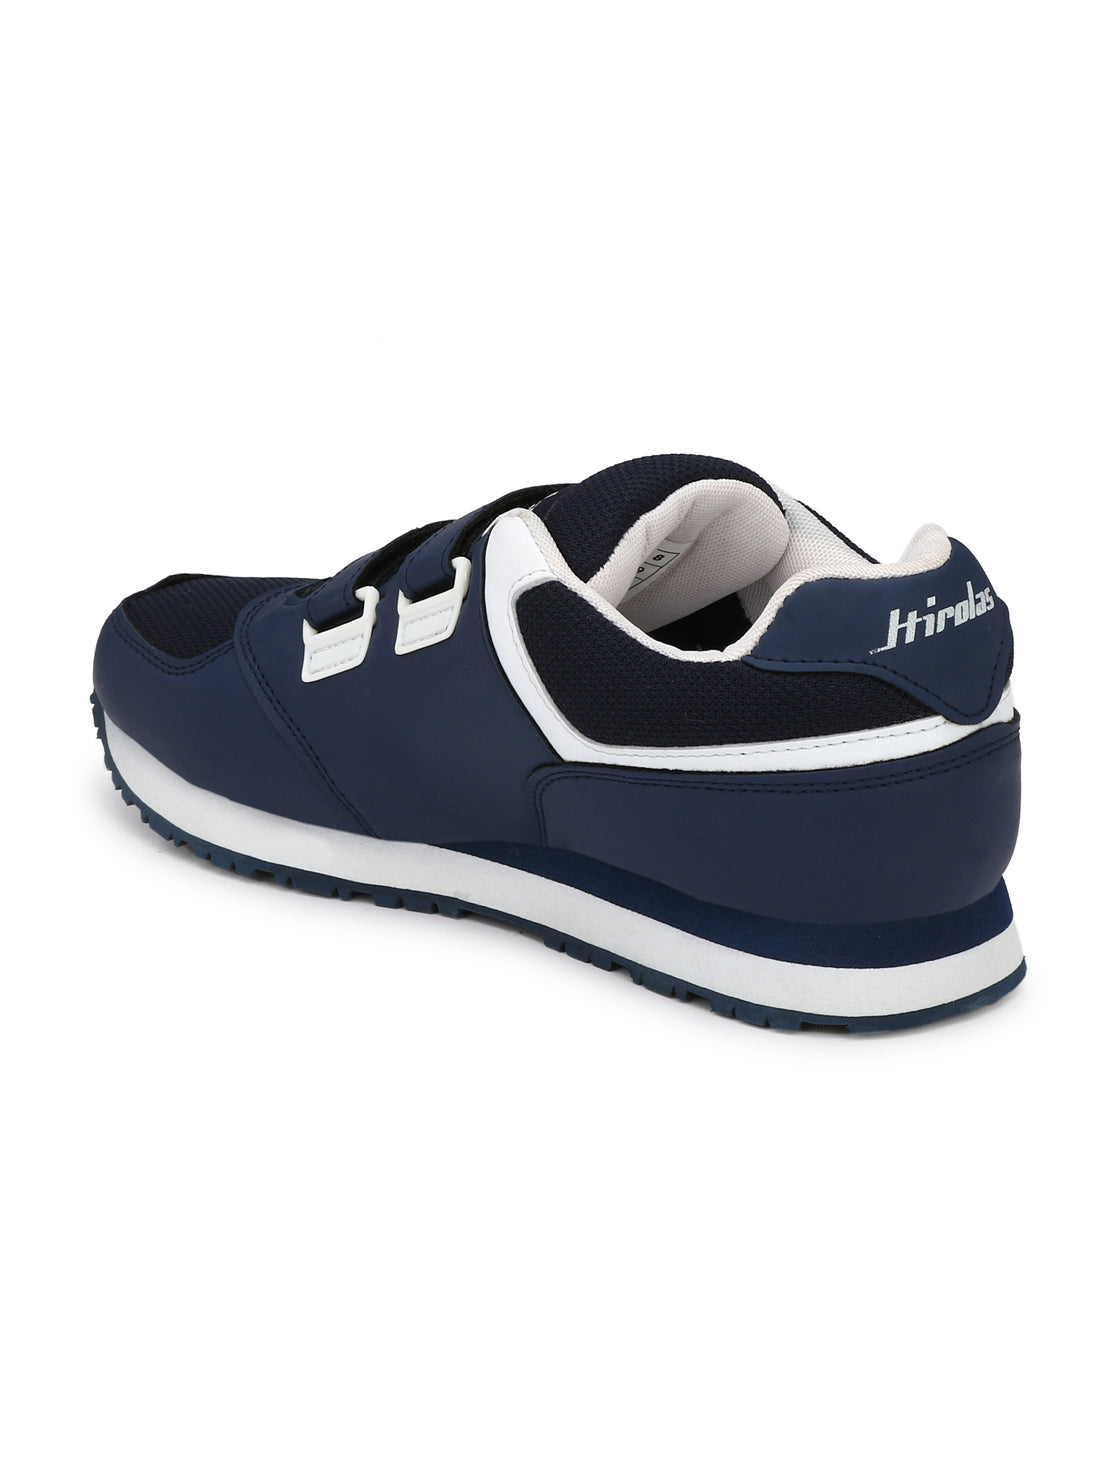 Hirolas® Men's Multisports Shock Absorbing Walking Running Fitness Athletic Training Gym Blue Slip On Sneaker Sport Shoes (HRL2061BLU)